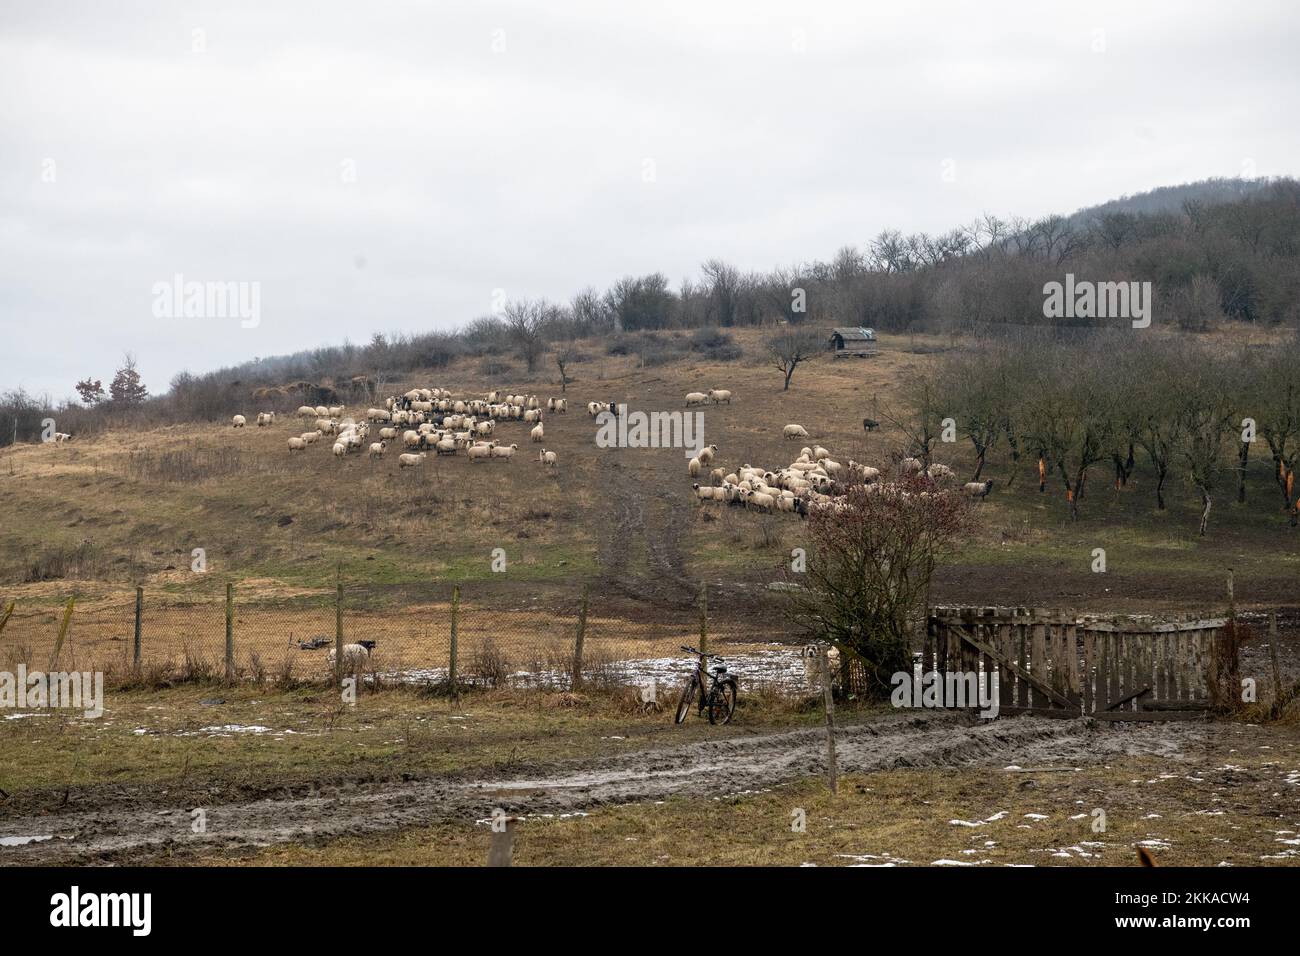 Romania, 2021-12-30. Mountain landscape in Bucovina with grazing sheep. Stock Photo